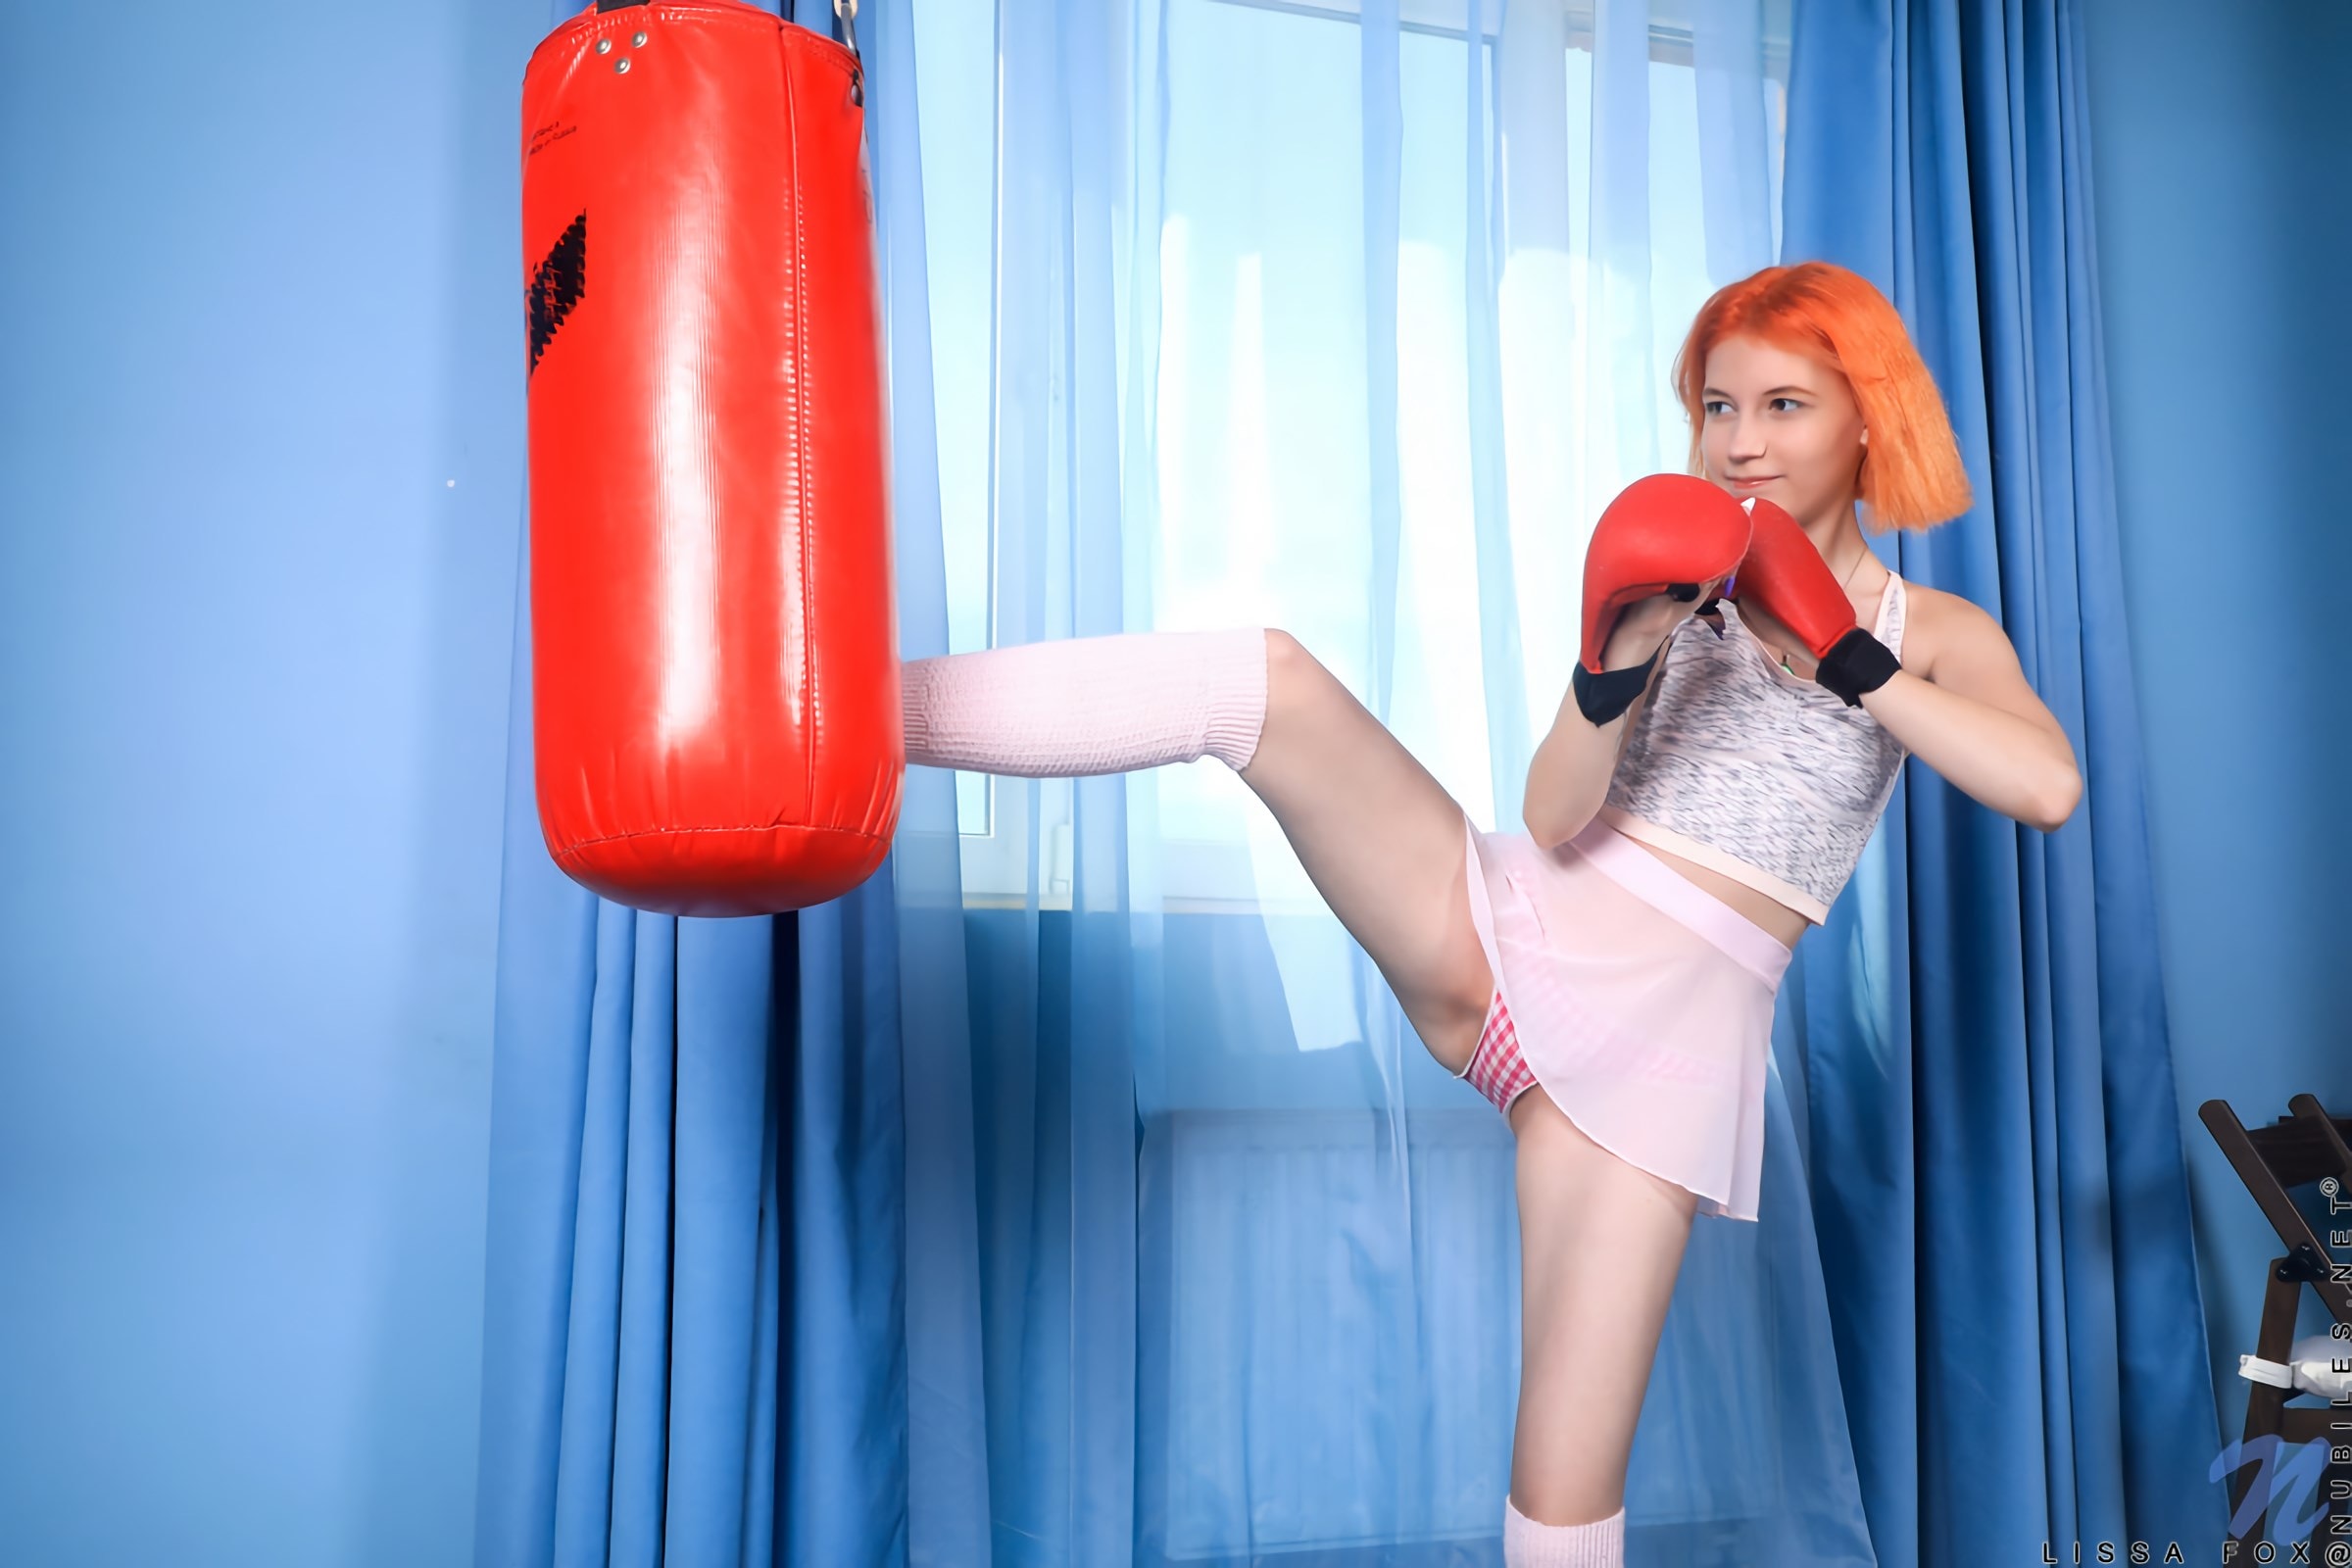 Nubiles 'Little Knockout' starring Lissa Fox (Photo 1)